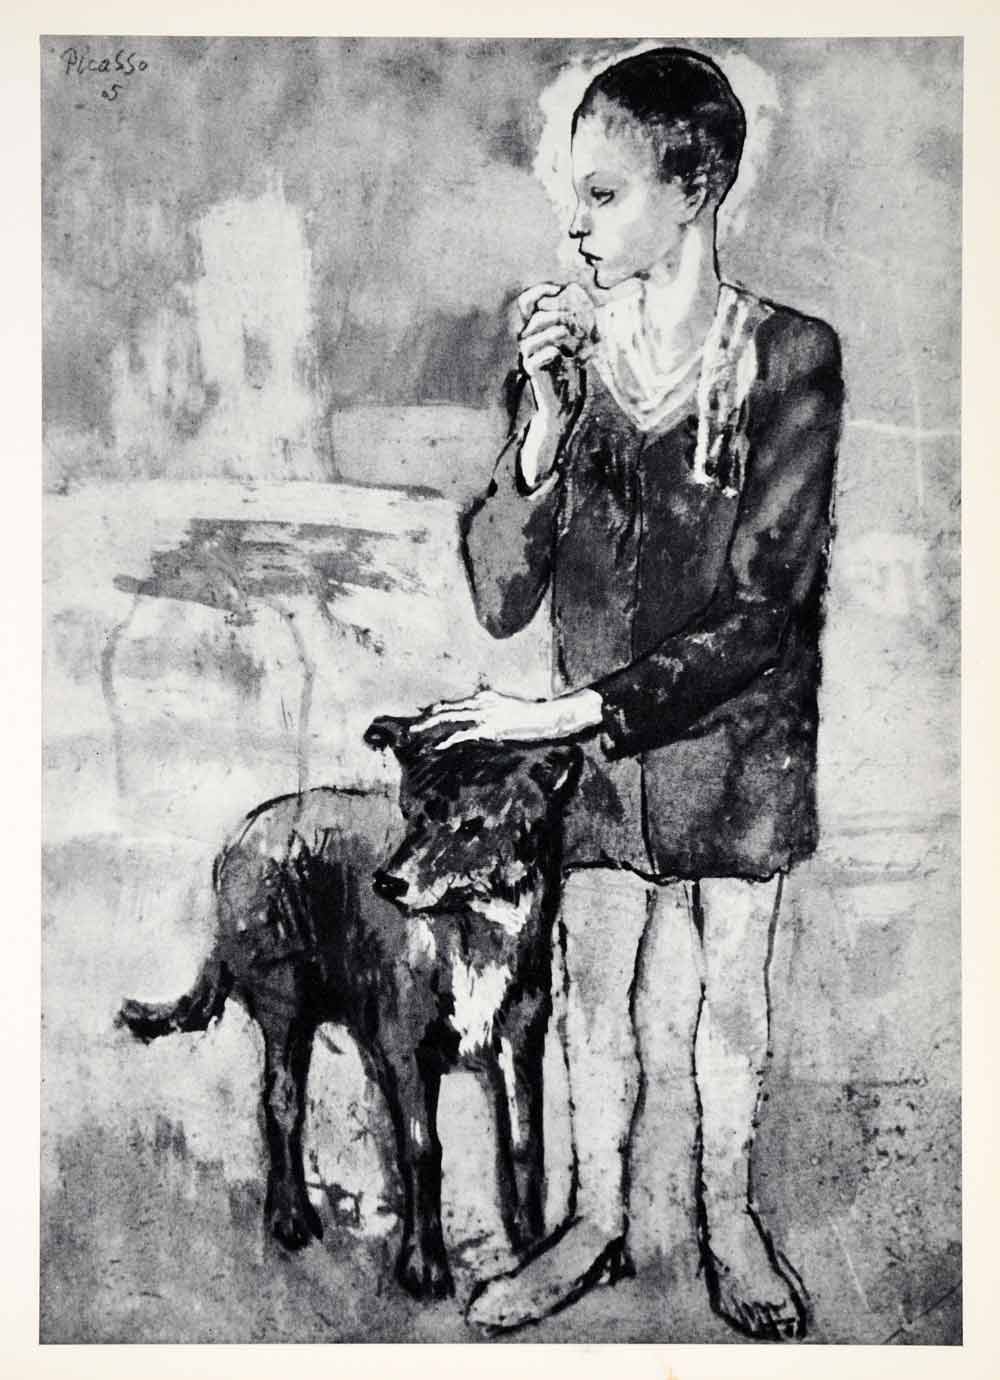 1965 Print Pablo Picasso Boy Dog Child Rose Period Friend Companion Art Love